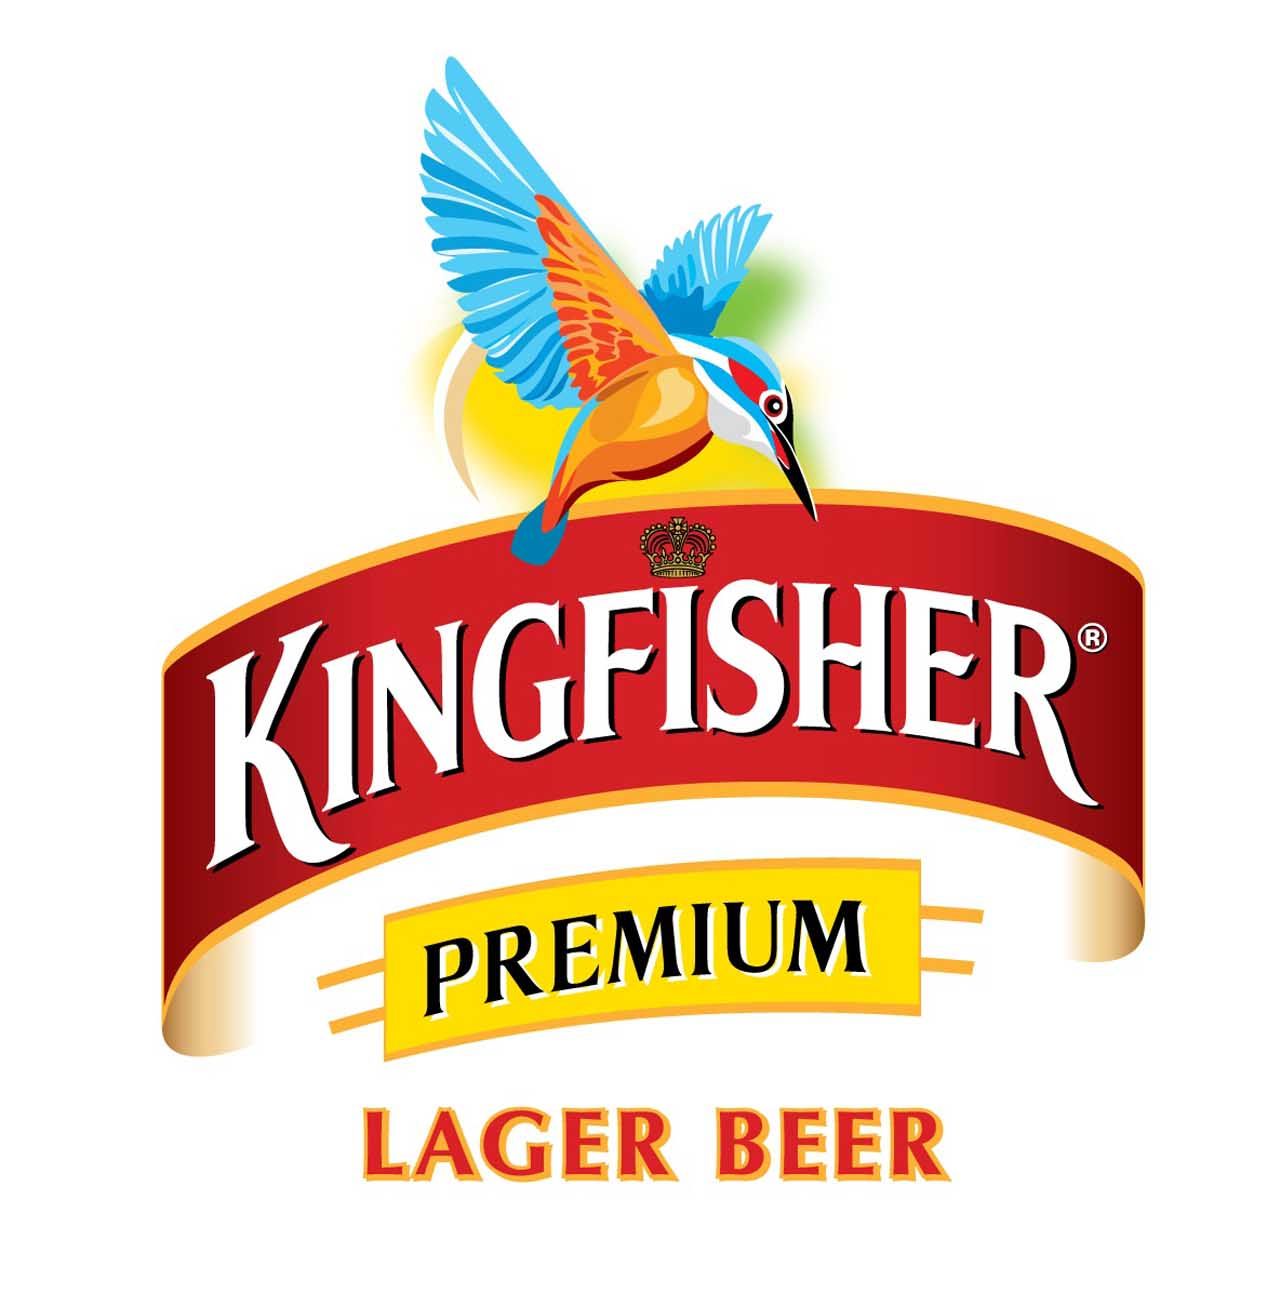 Kingfisher Simple Mascot Logo Graphic by artnivora.std · Creative Fabrica